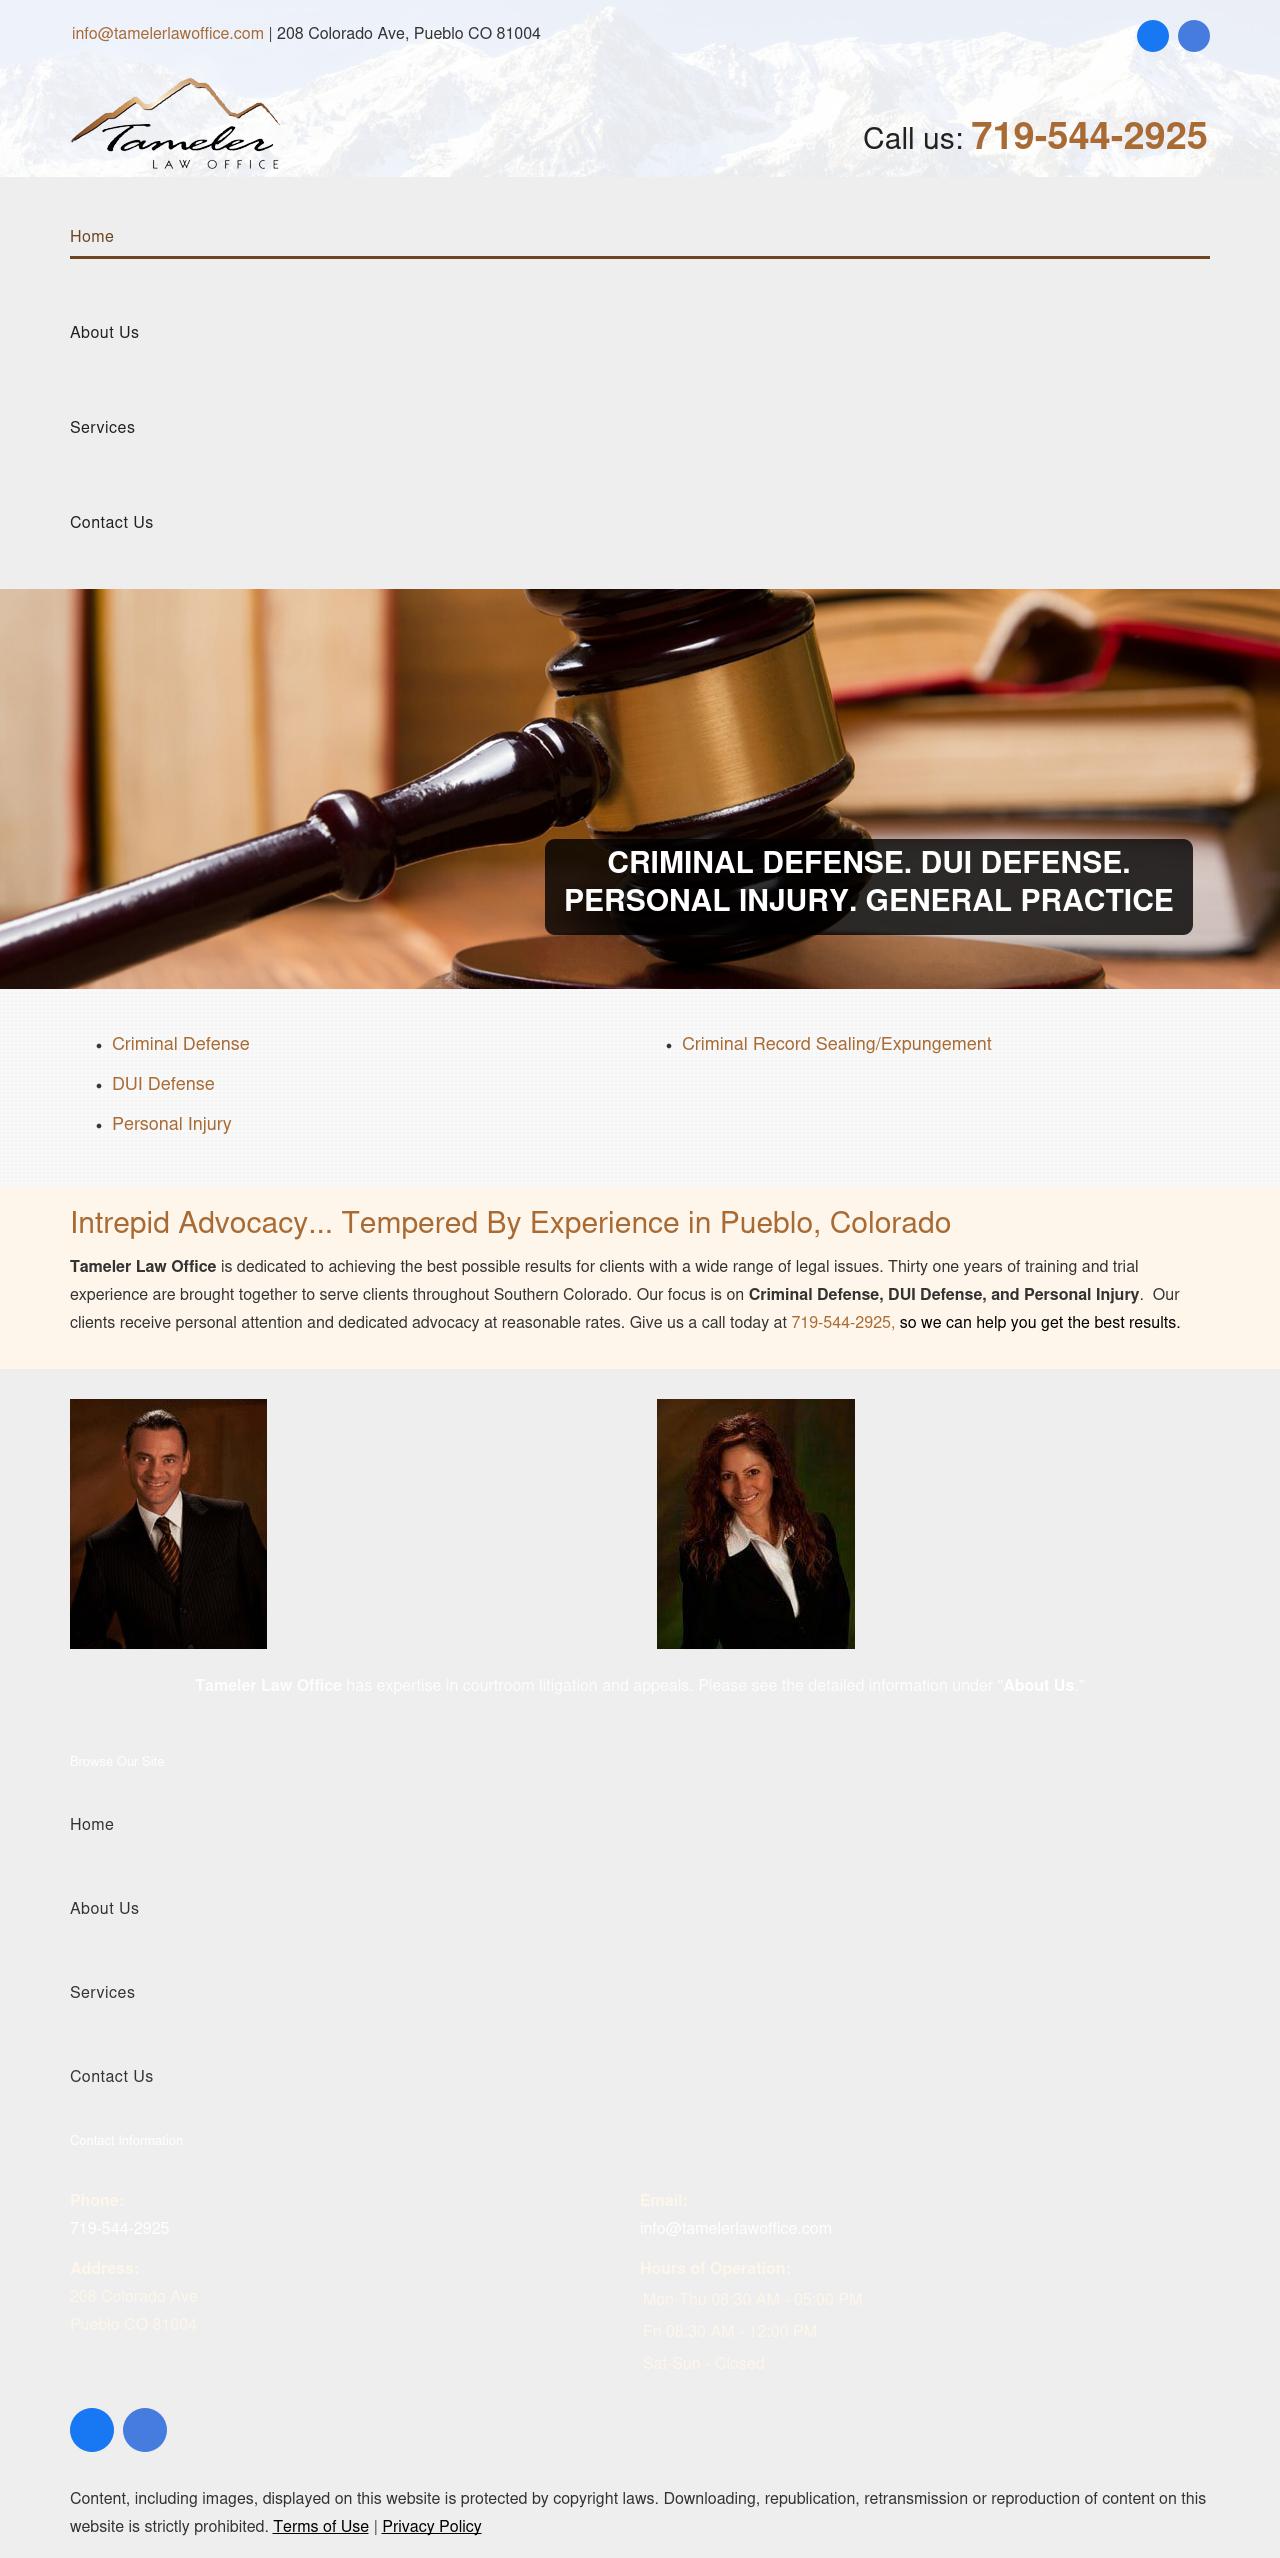 Tameler Law Office - Pueblo CO Lawyers